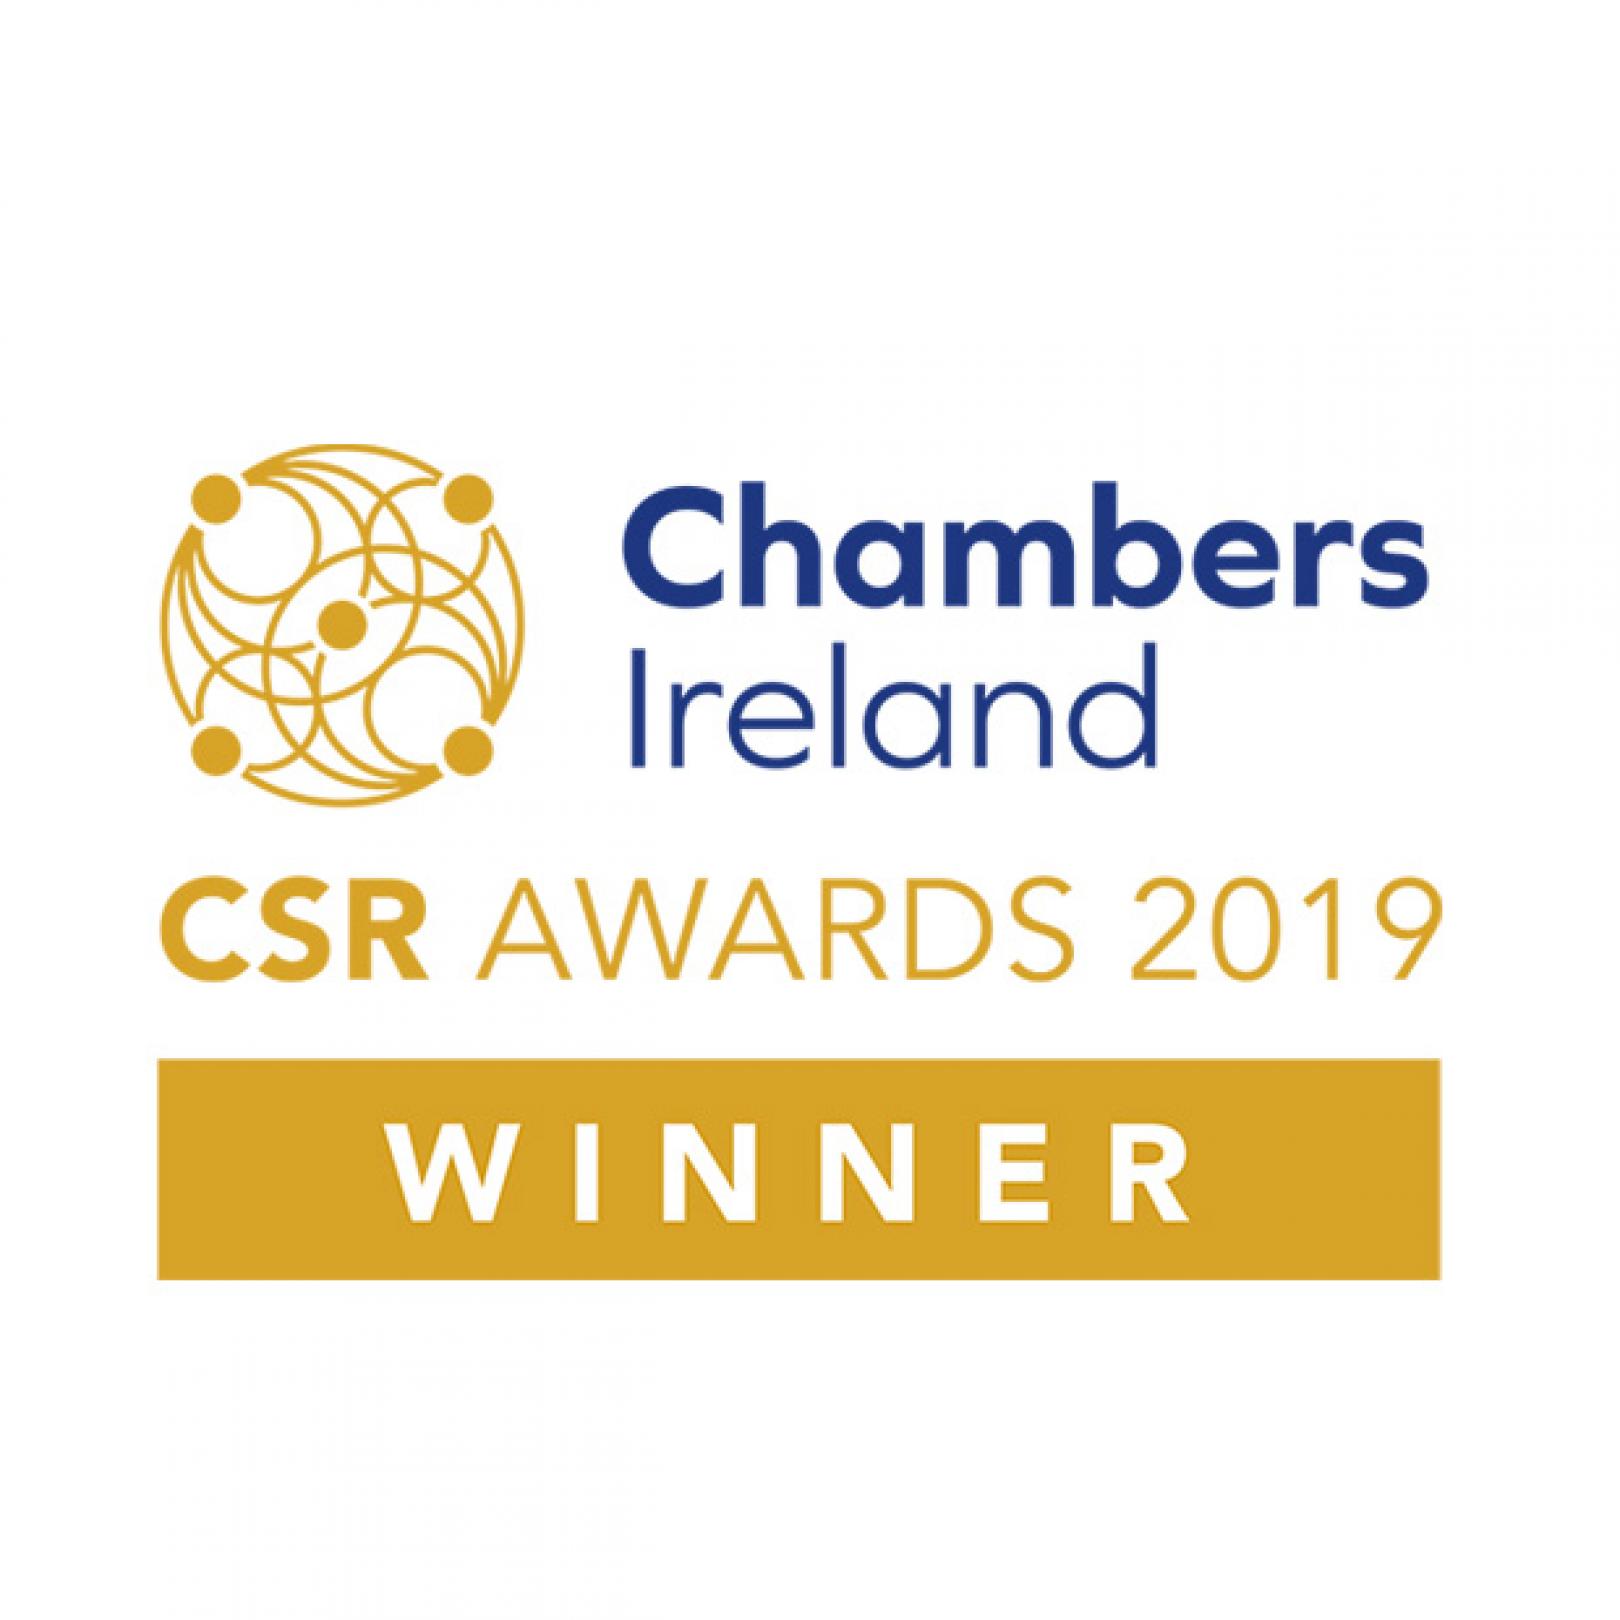 Chambers Ireland CSR Awards 2019